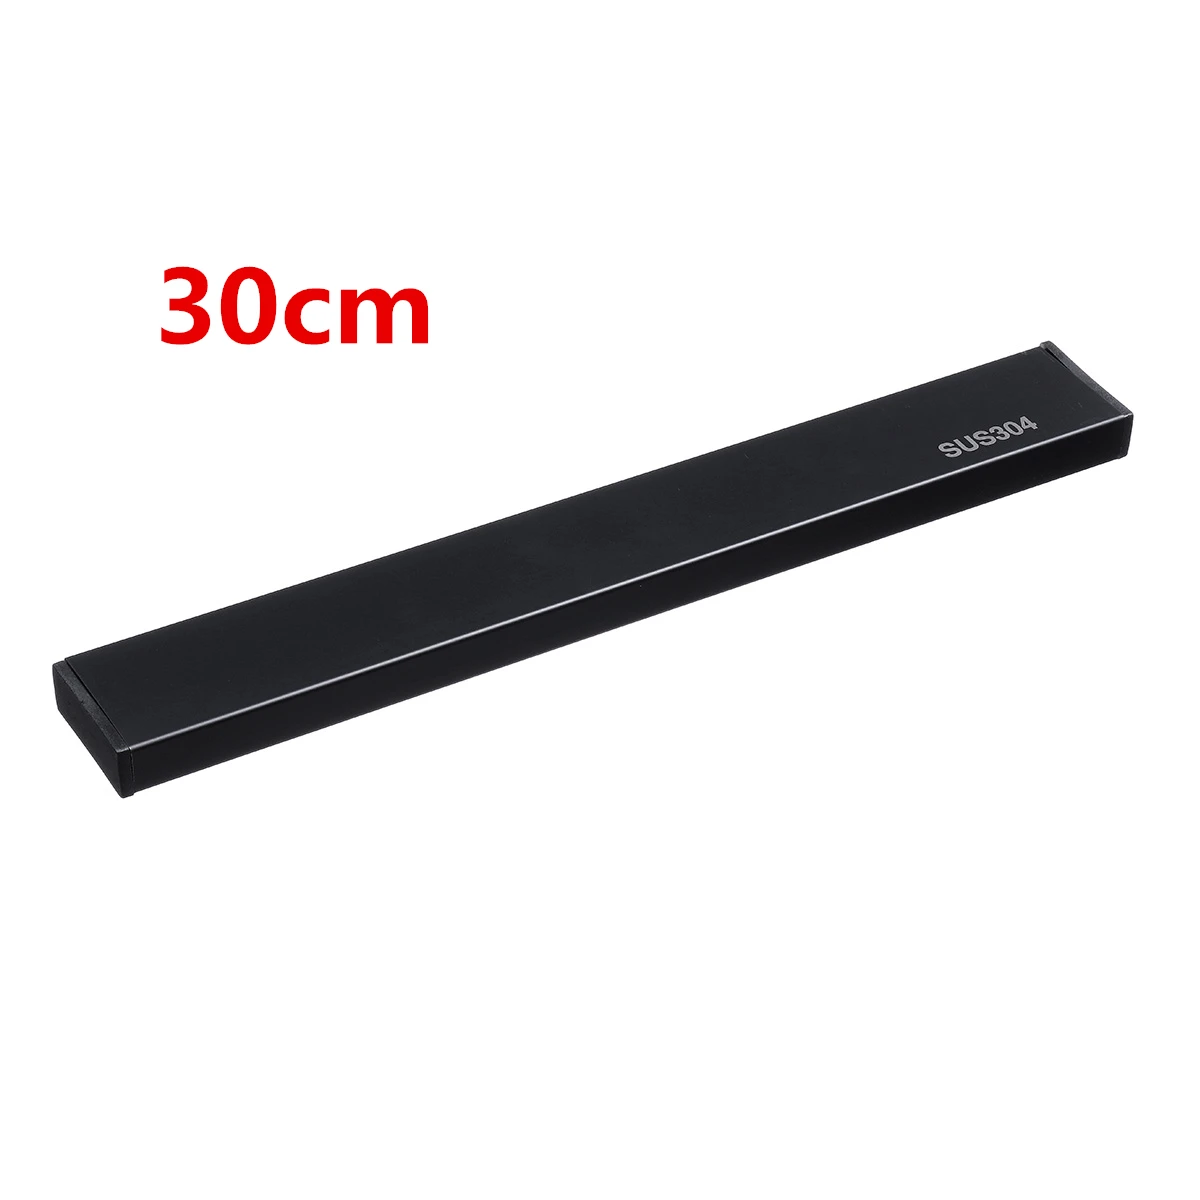 50cm Length Blocks Knife Holder Strong Magnetic Self-adhesive Wall Mounted Kitchen Magnet Bar Holder Display Rack Strip Stand - Цвет: 30cm